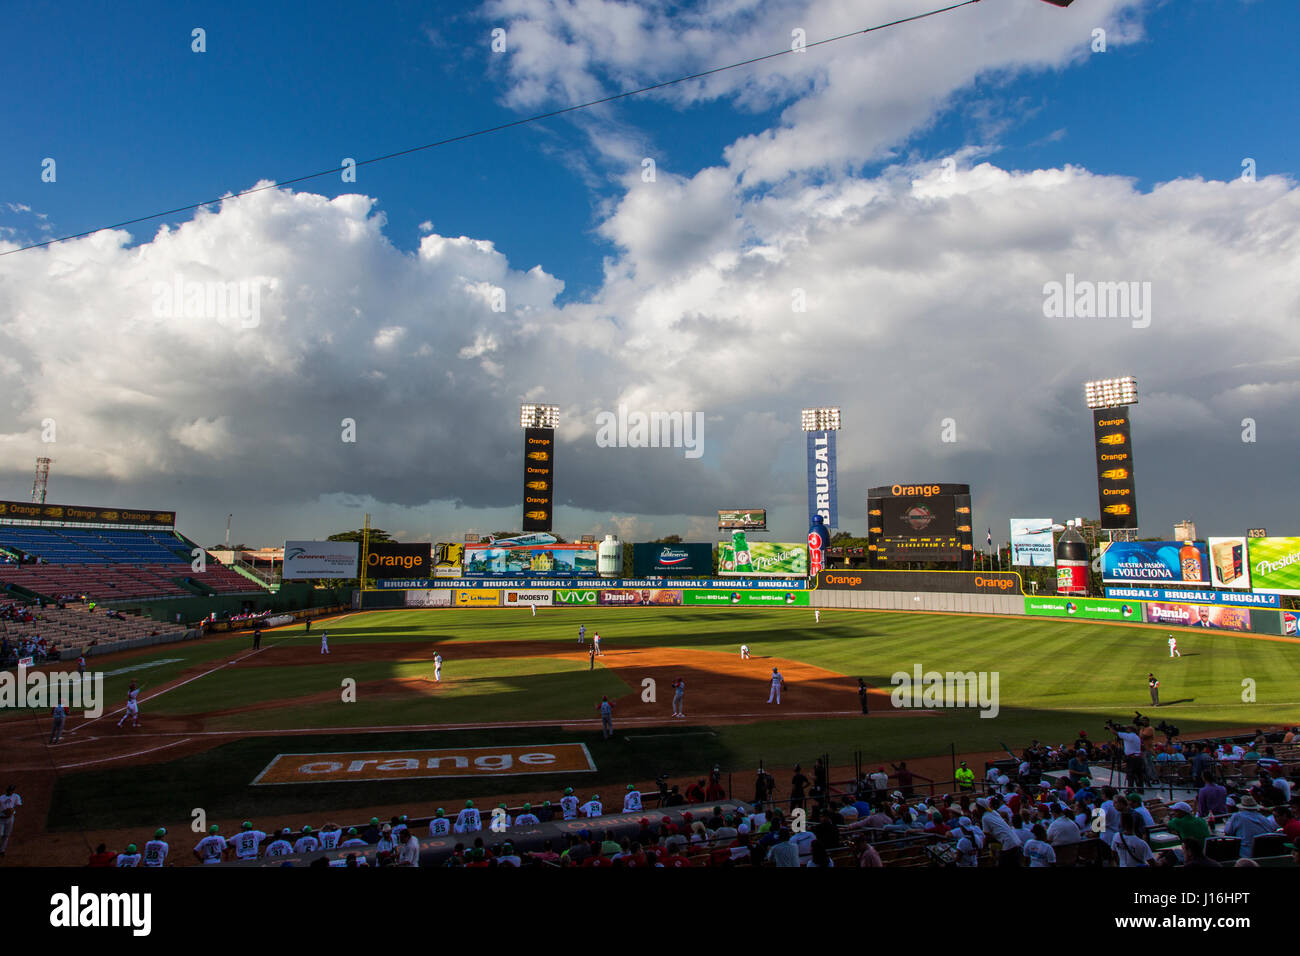 The Stadium In Santo Domingo, Dominican Republic Where La Serie Caribe, An Annual Baseball Tournament In Latin America, Was Played In 2016 Stock Photo